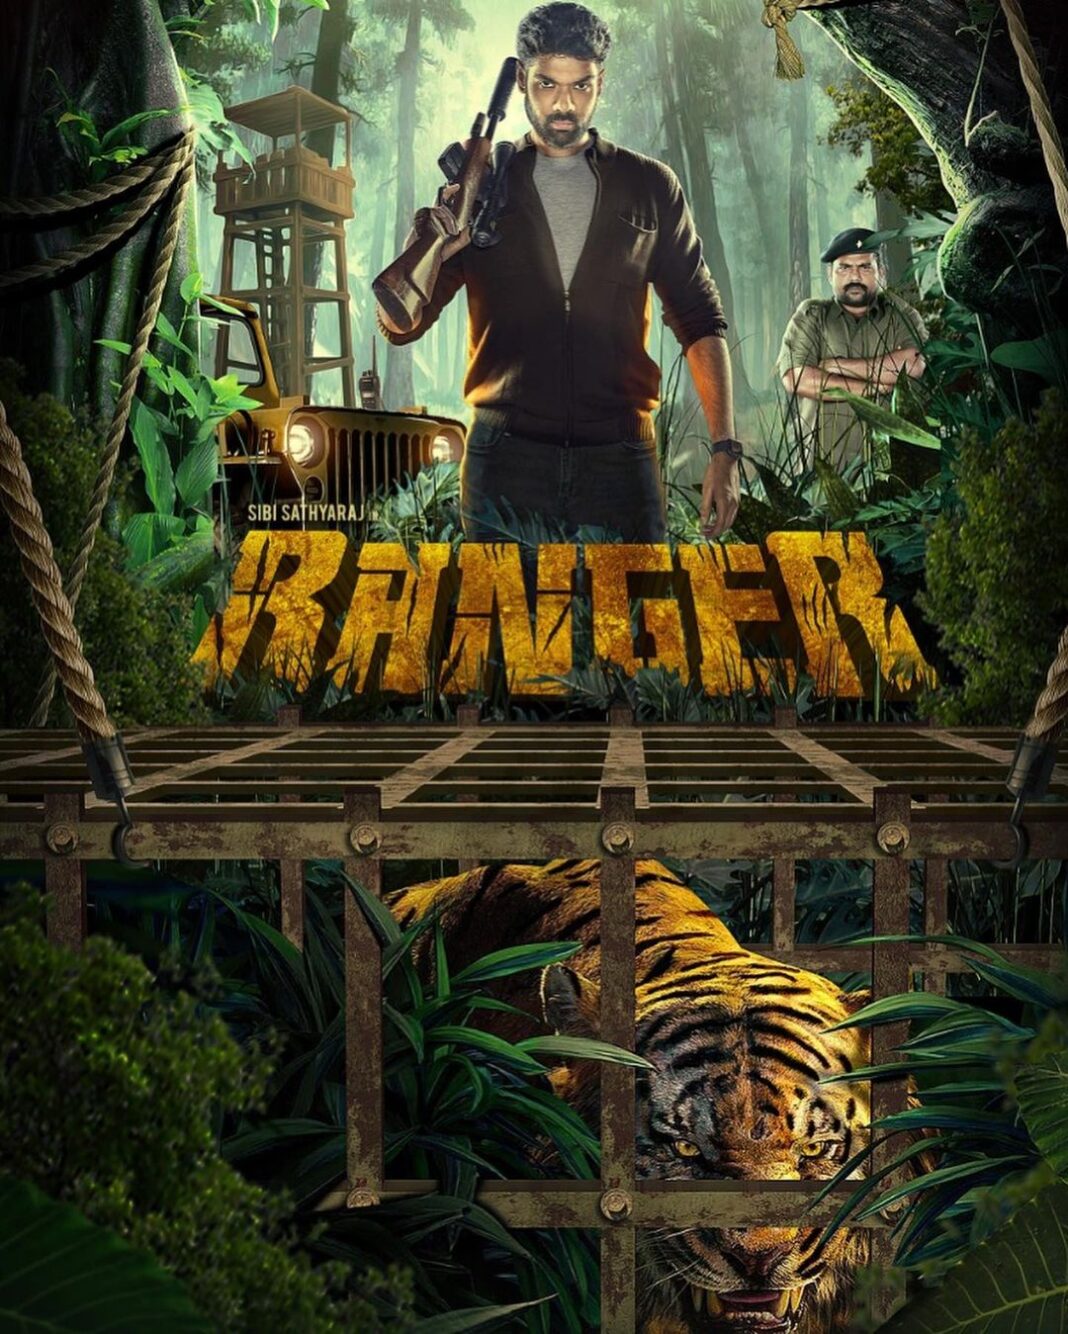 Sibi Sathyaraj Instagram - Here’s the 1st look of my next film #Ranger! #Savethetiger @ramyanambessan @iammadhushalini